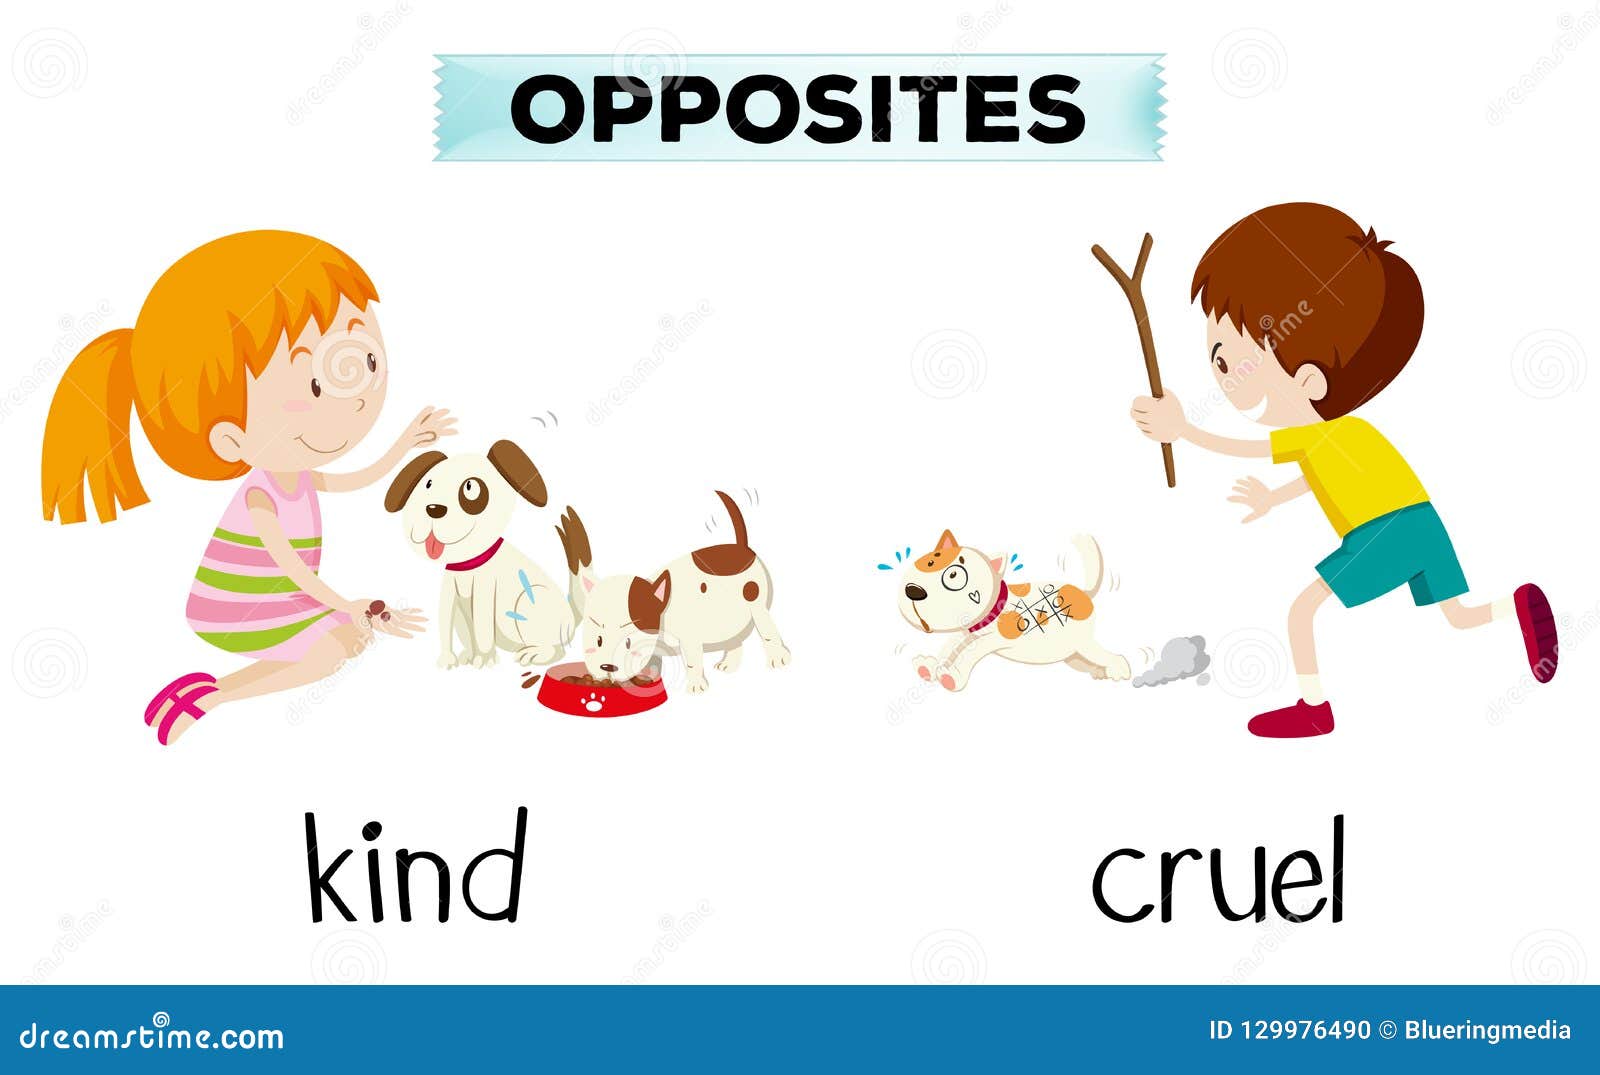 Kind на русском языке. Kind рисунок. Kind and friendly для детей. Opposites картинки для детей. Kind картинка для детей.